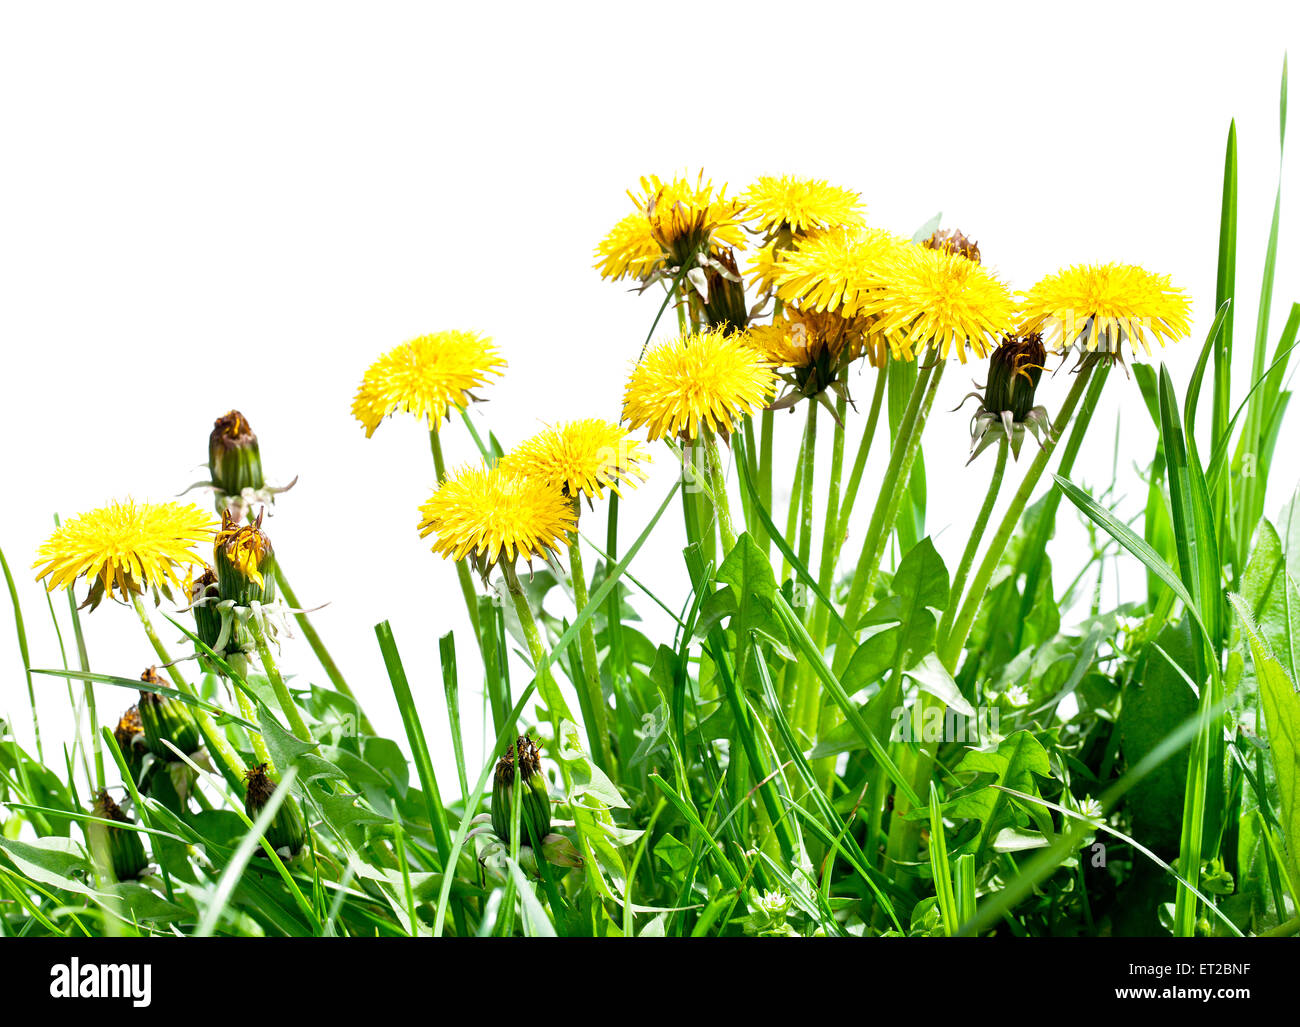 Dandelion flowers in the fresh green grass. Stock Photo